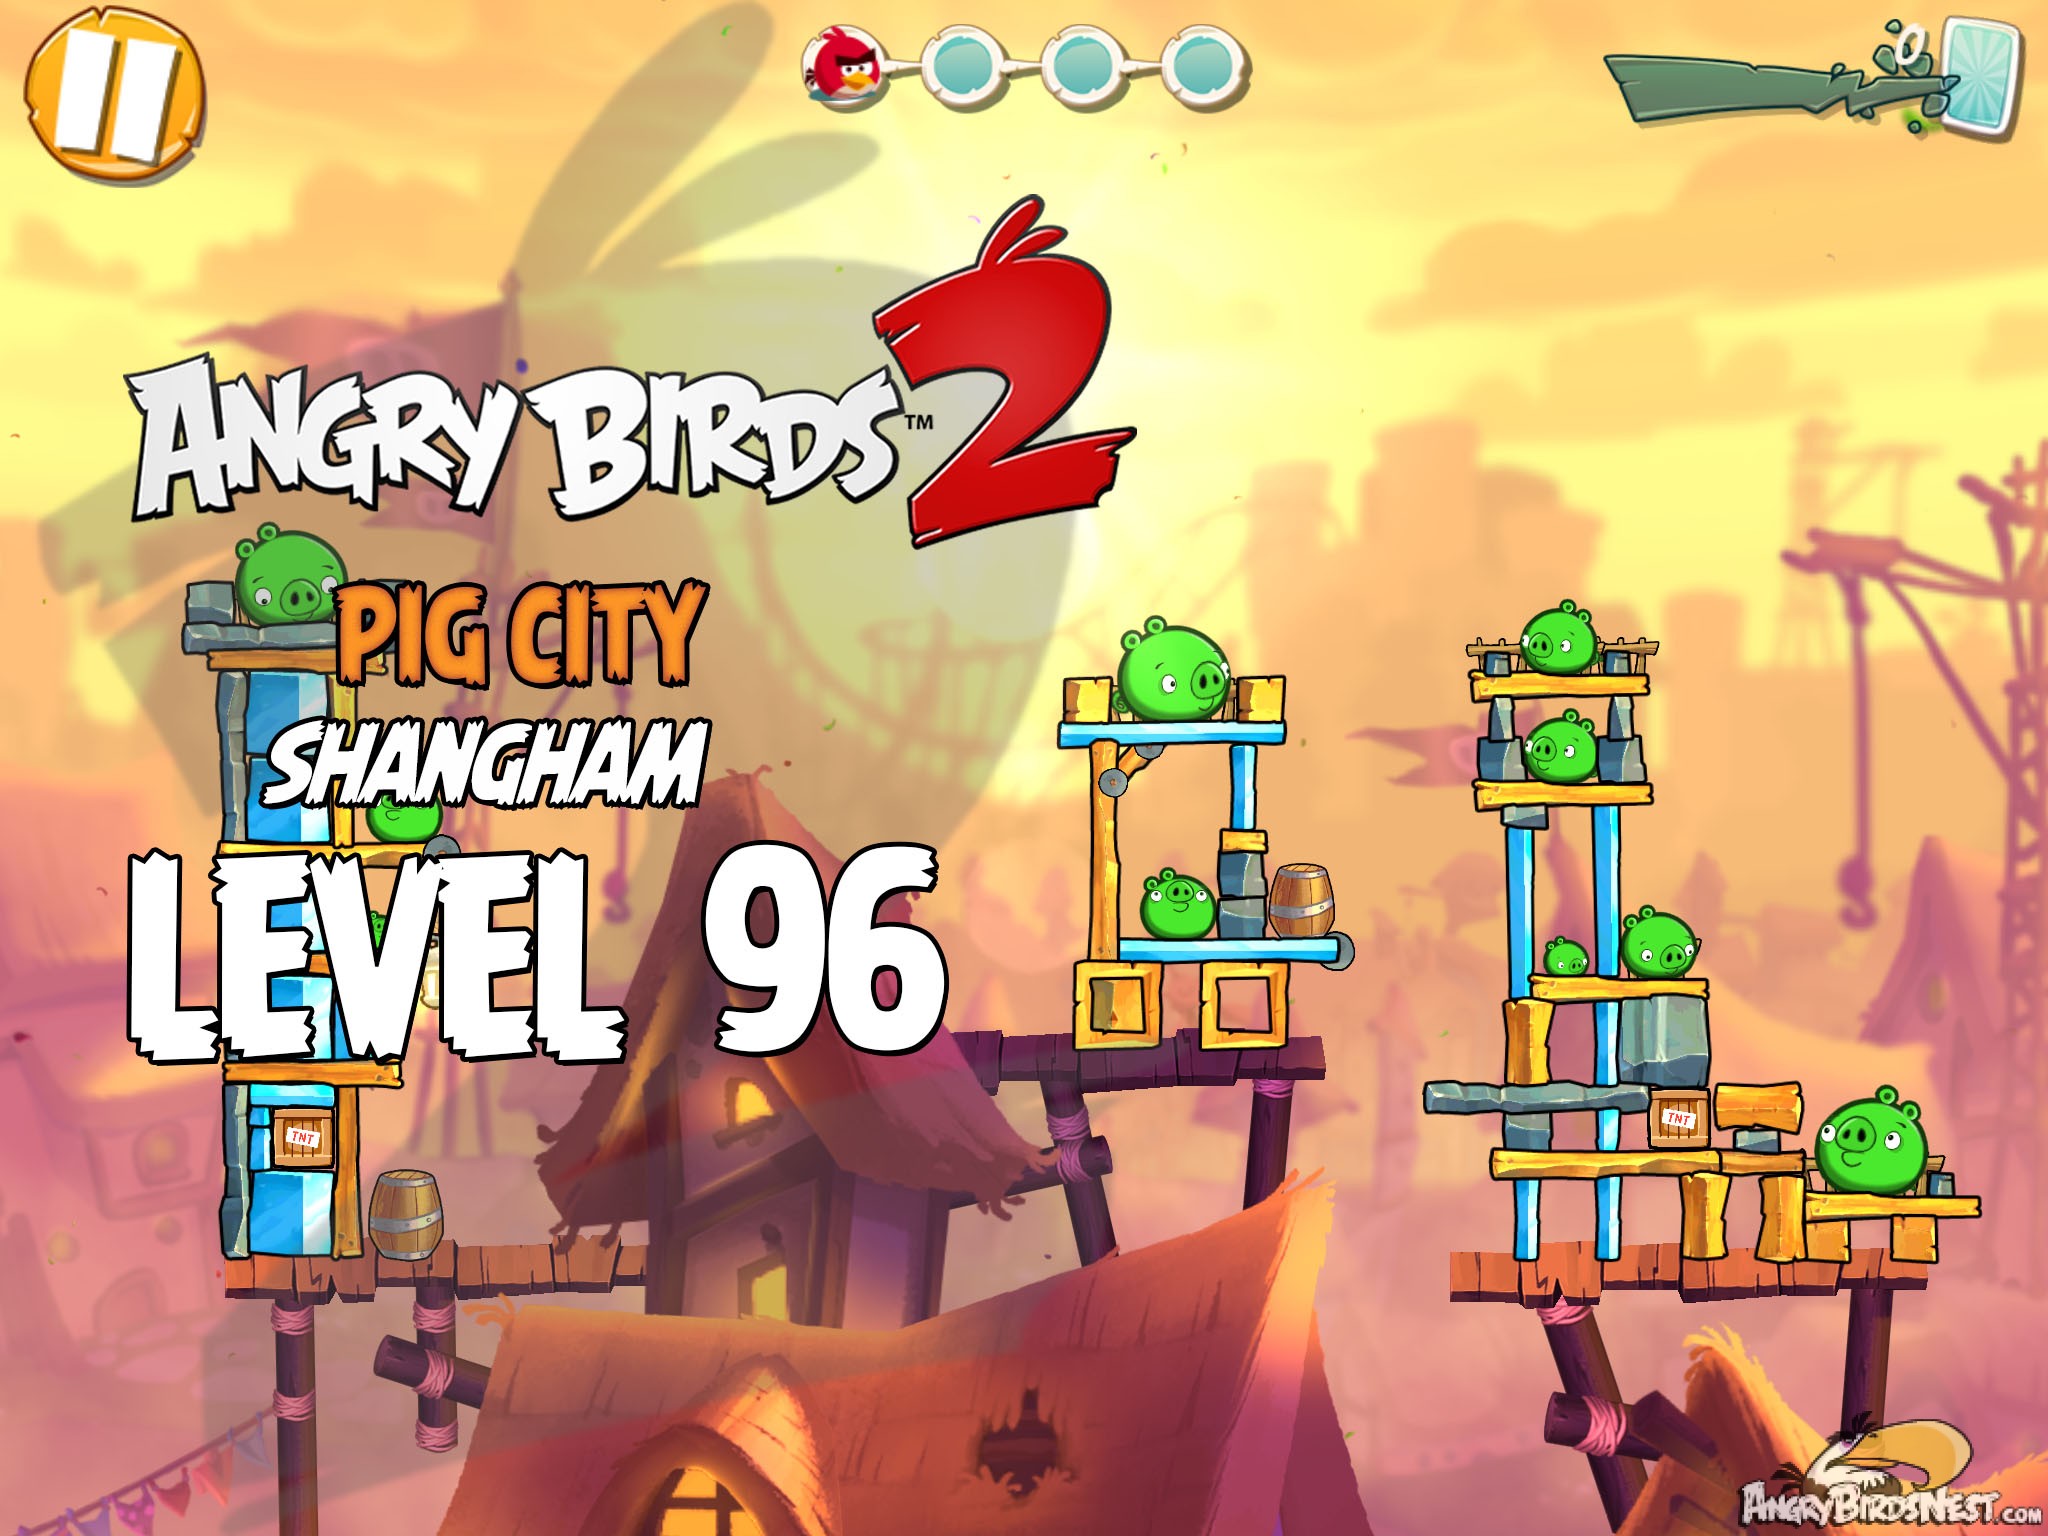 Angry Birds 2 Pig City Shangham Level 96